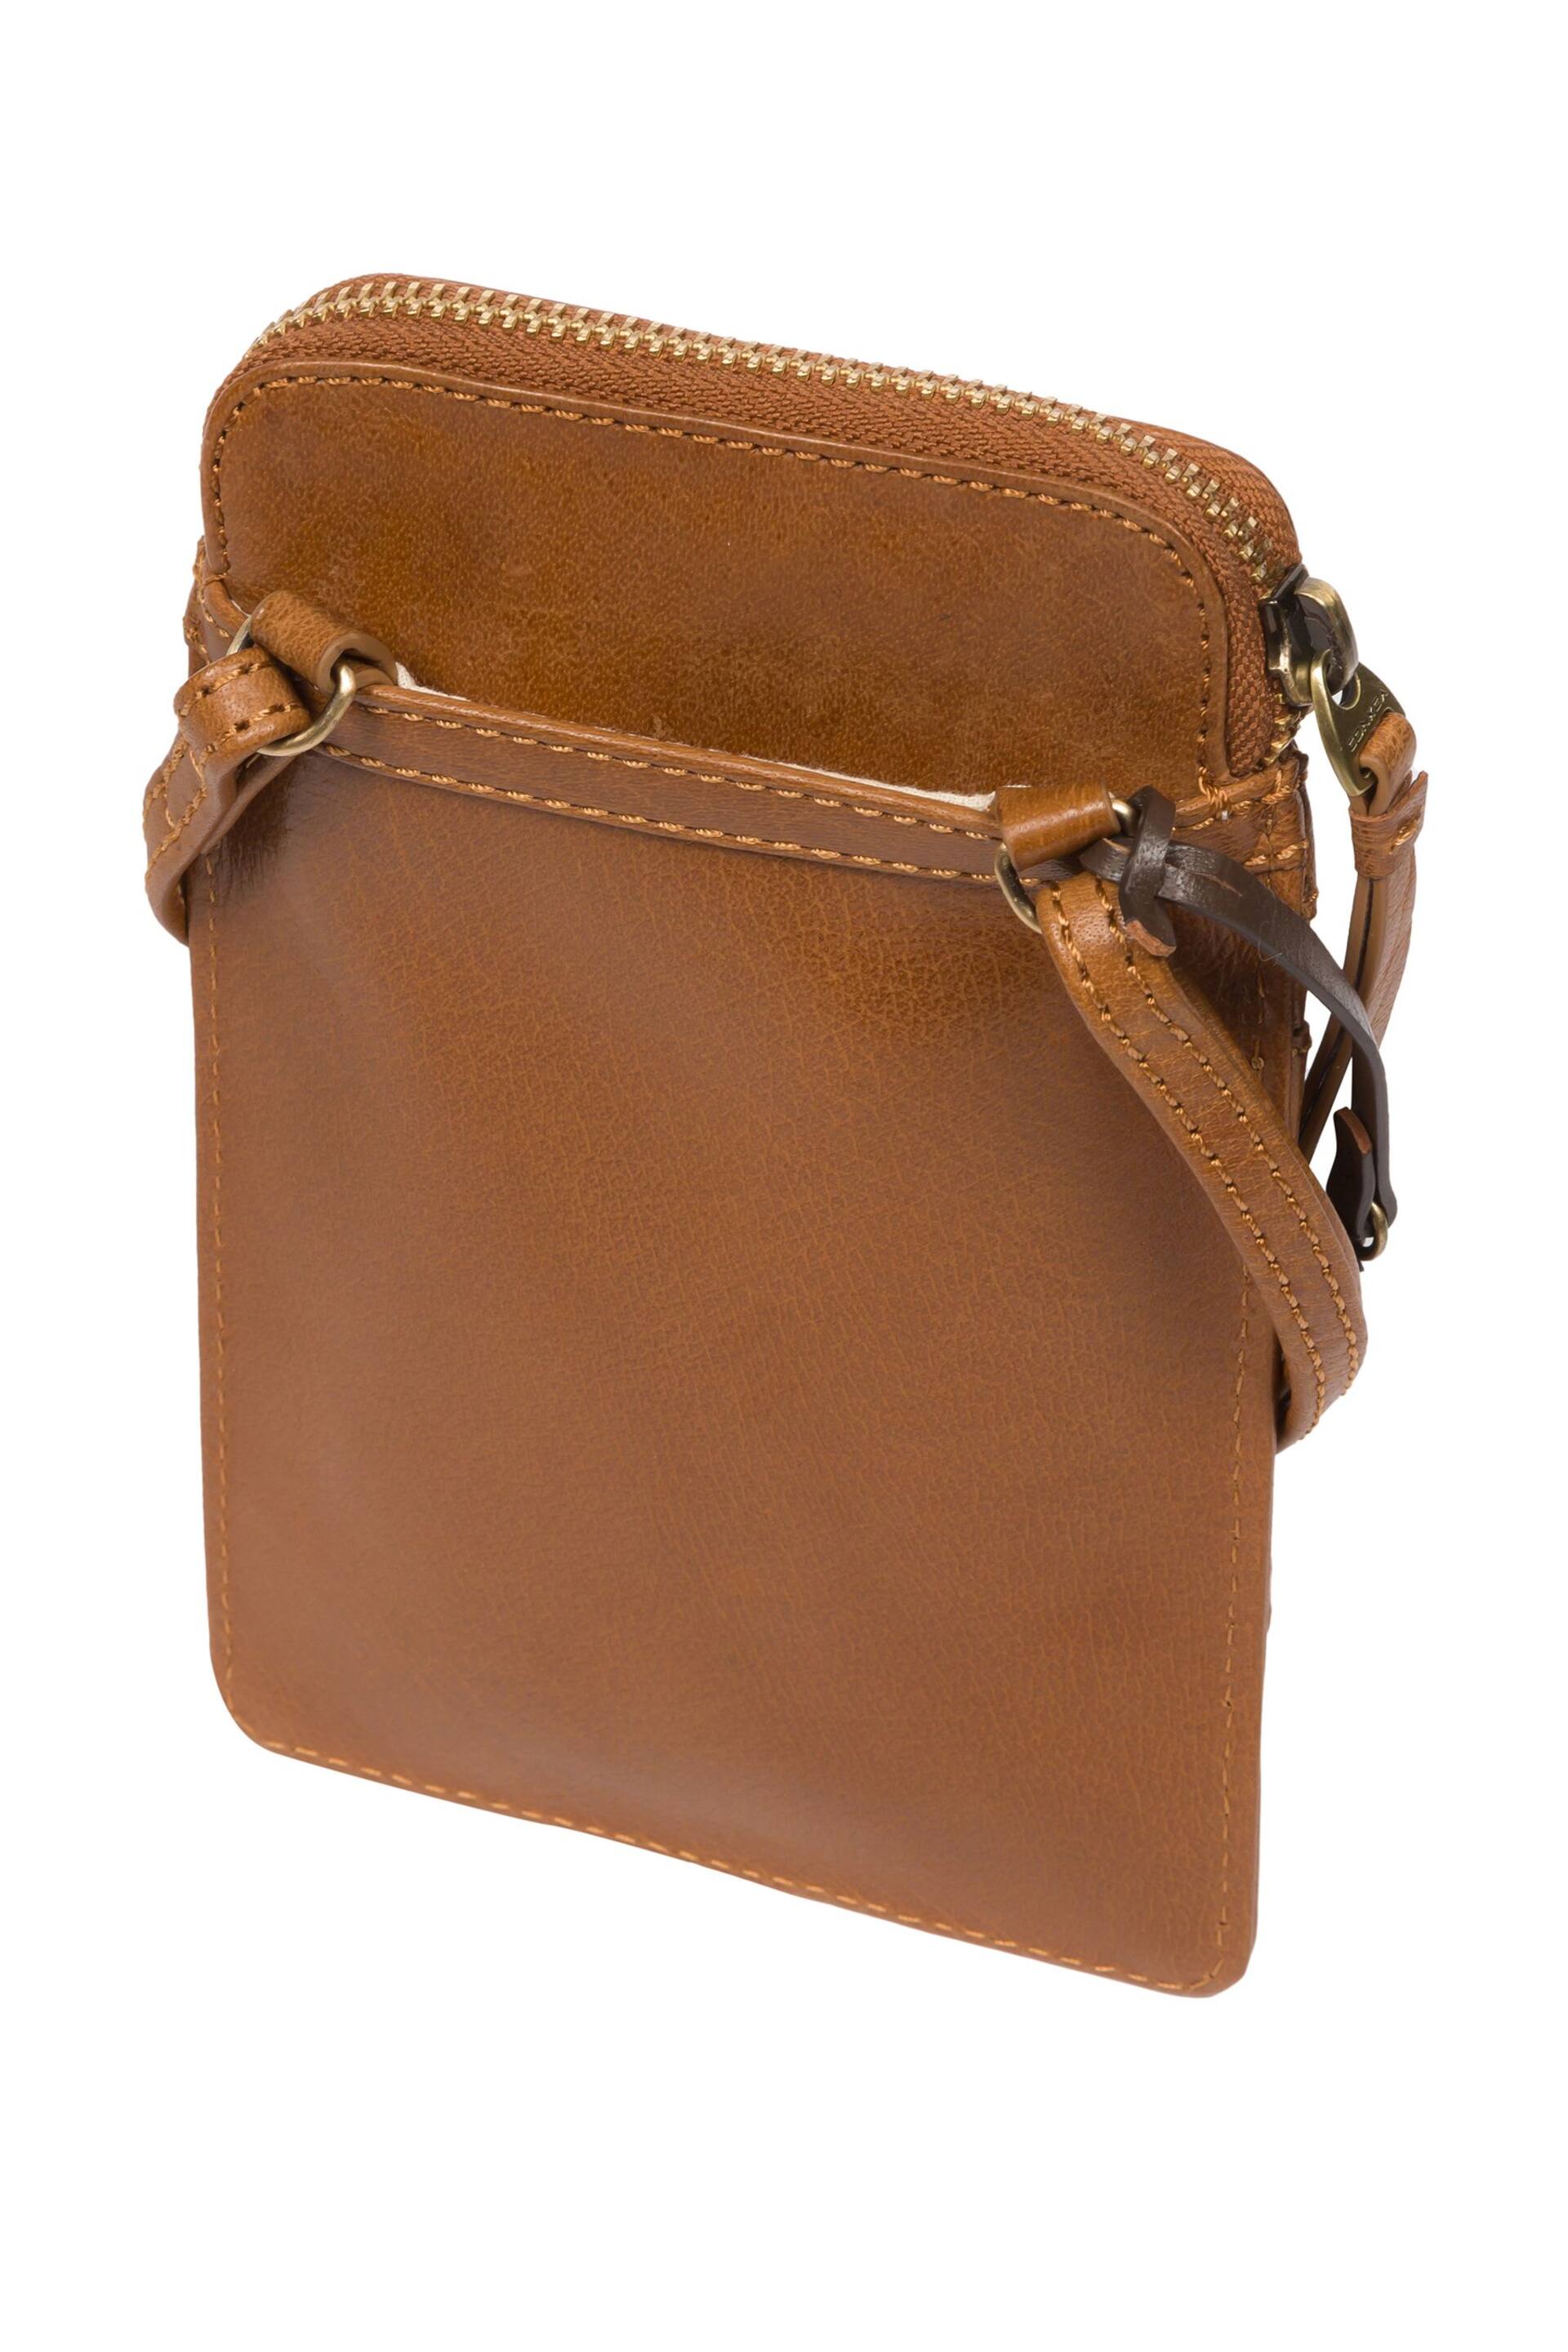 Conkca Bambino Leather Cross-Body Phone Bag - Image 5 of 9